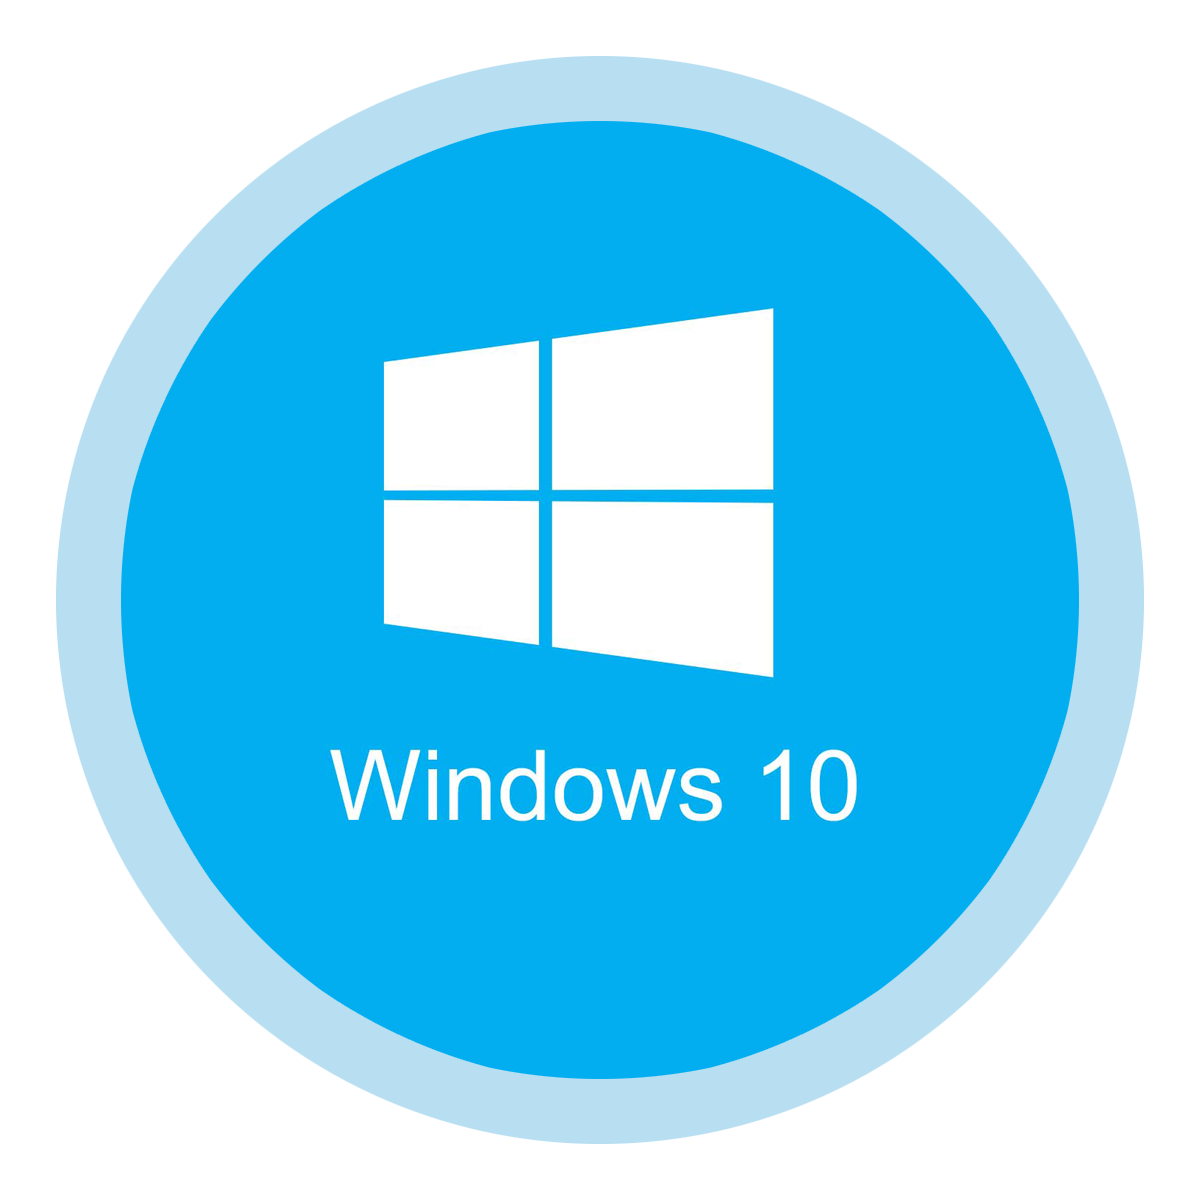 windows 10 professional